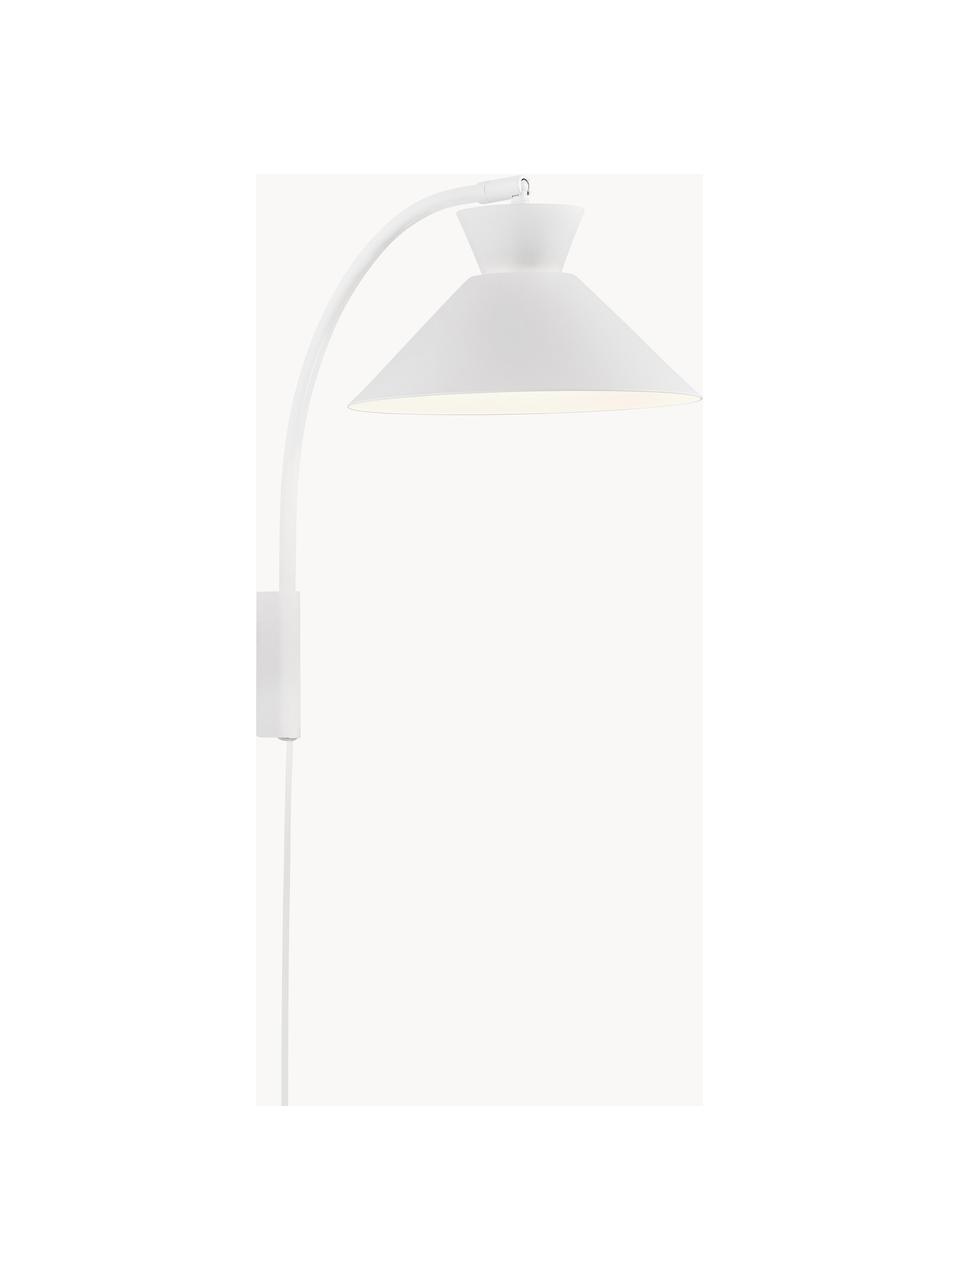 Wandlamp Dial met stekker, Lampenkap: gecoat metaal, Wit, Ø 25 x H 40 cm